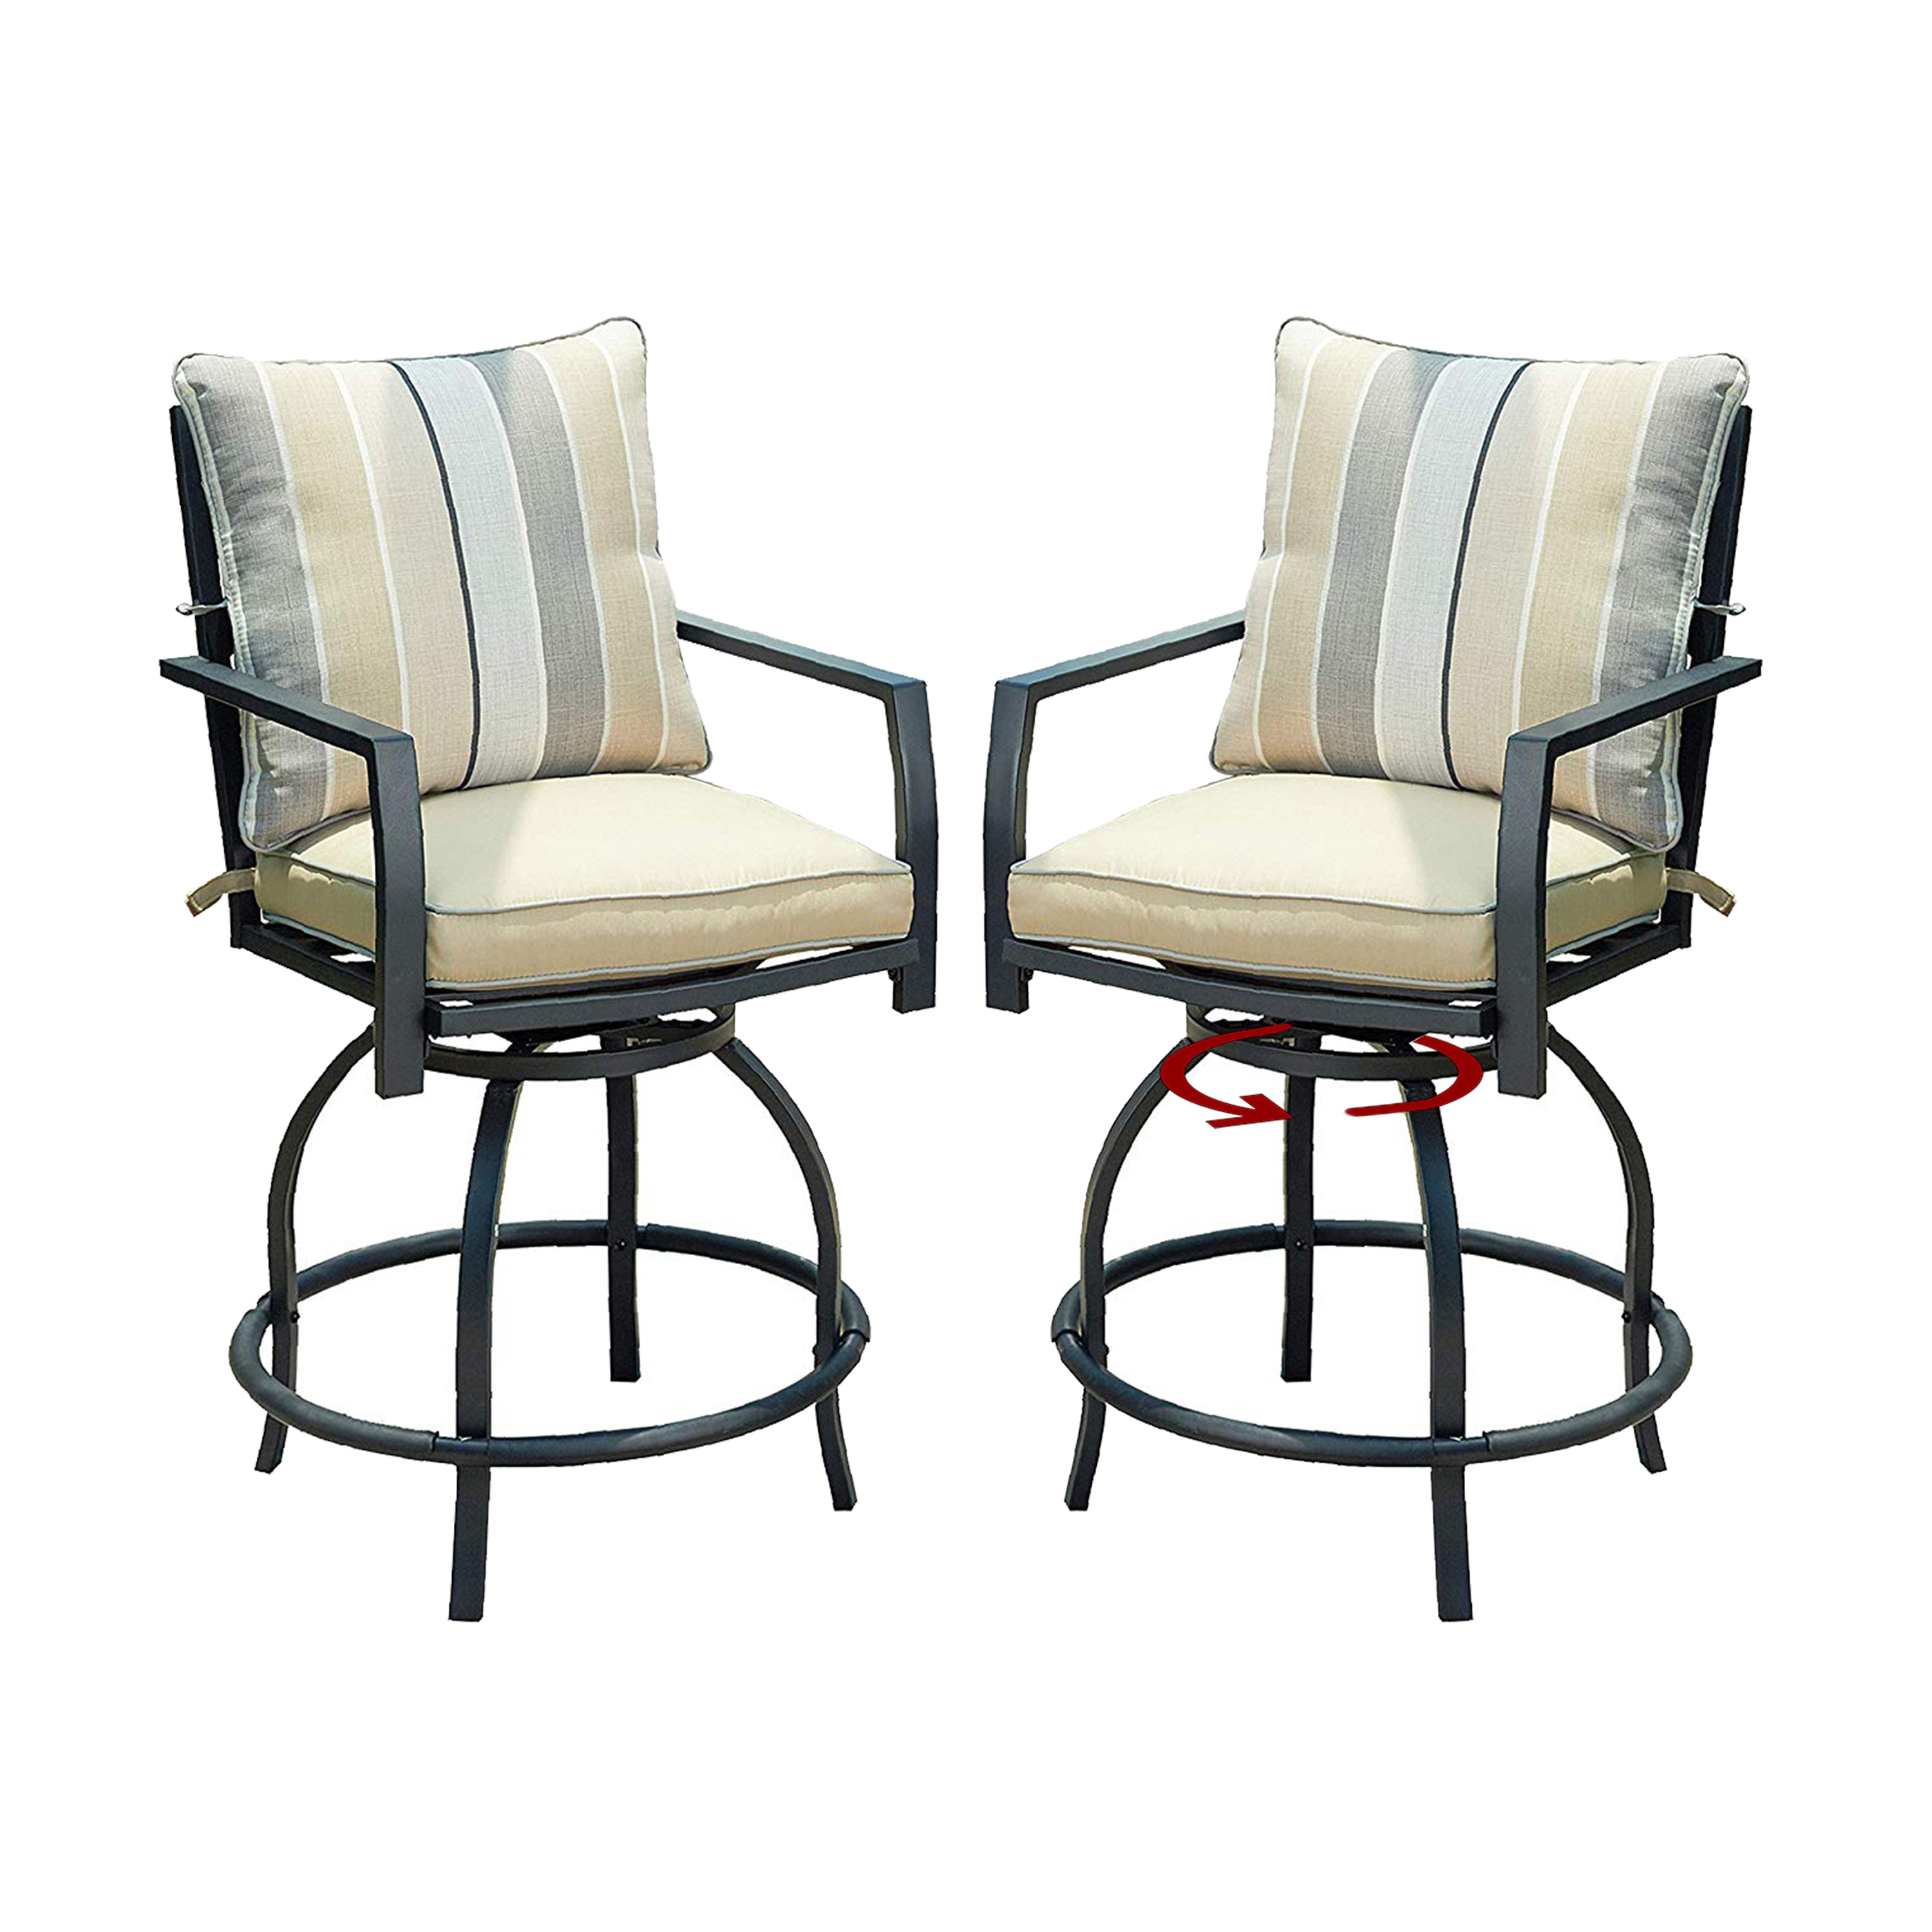 Metal Frame Swivel Bar Stool Chair, White Outdoor Swivel Bar Stools With Backs